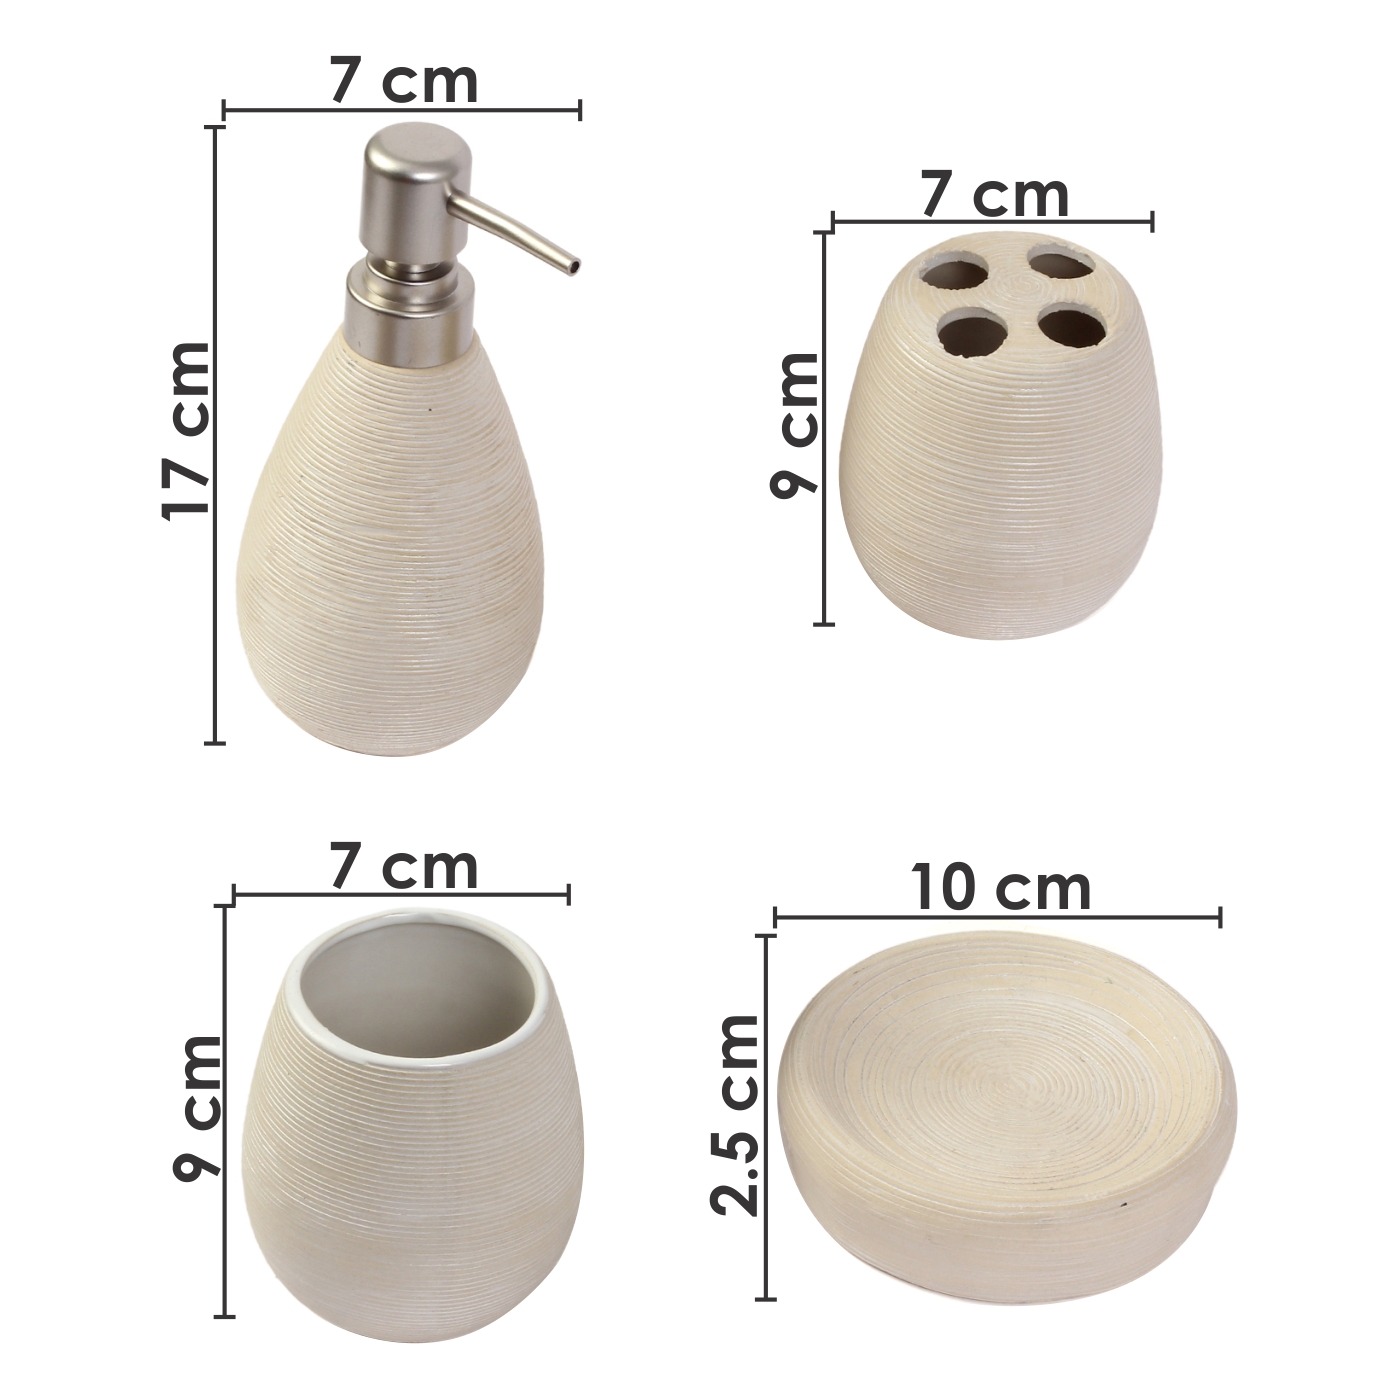 ORKA Ceramic Liquid Soap Dispenser For Bathroom/Kitchen Use (White)  